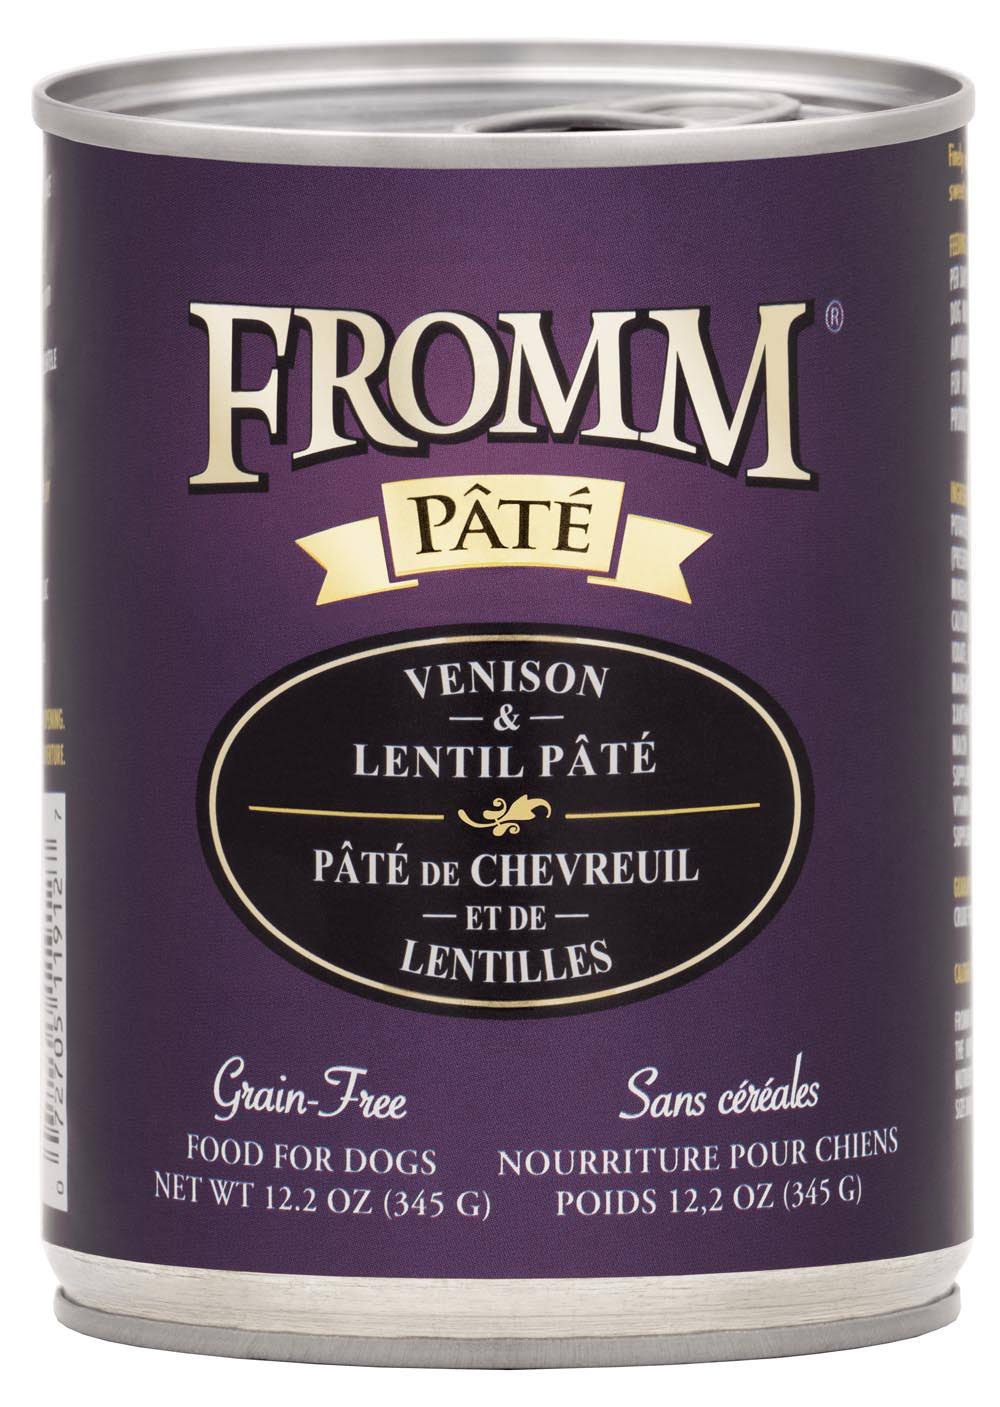 Fromm Grain Free Venison & Lentil Pate Canned Dog Food - 12.2 oz, Case of 12